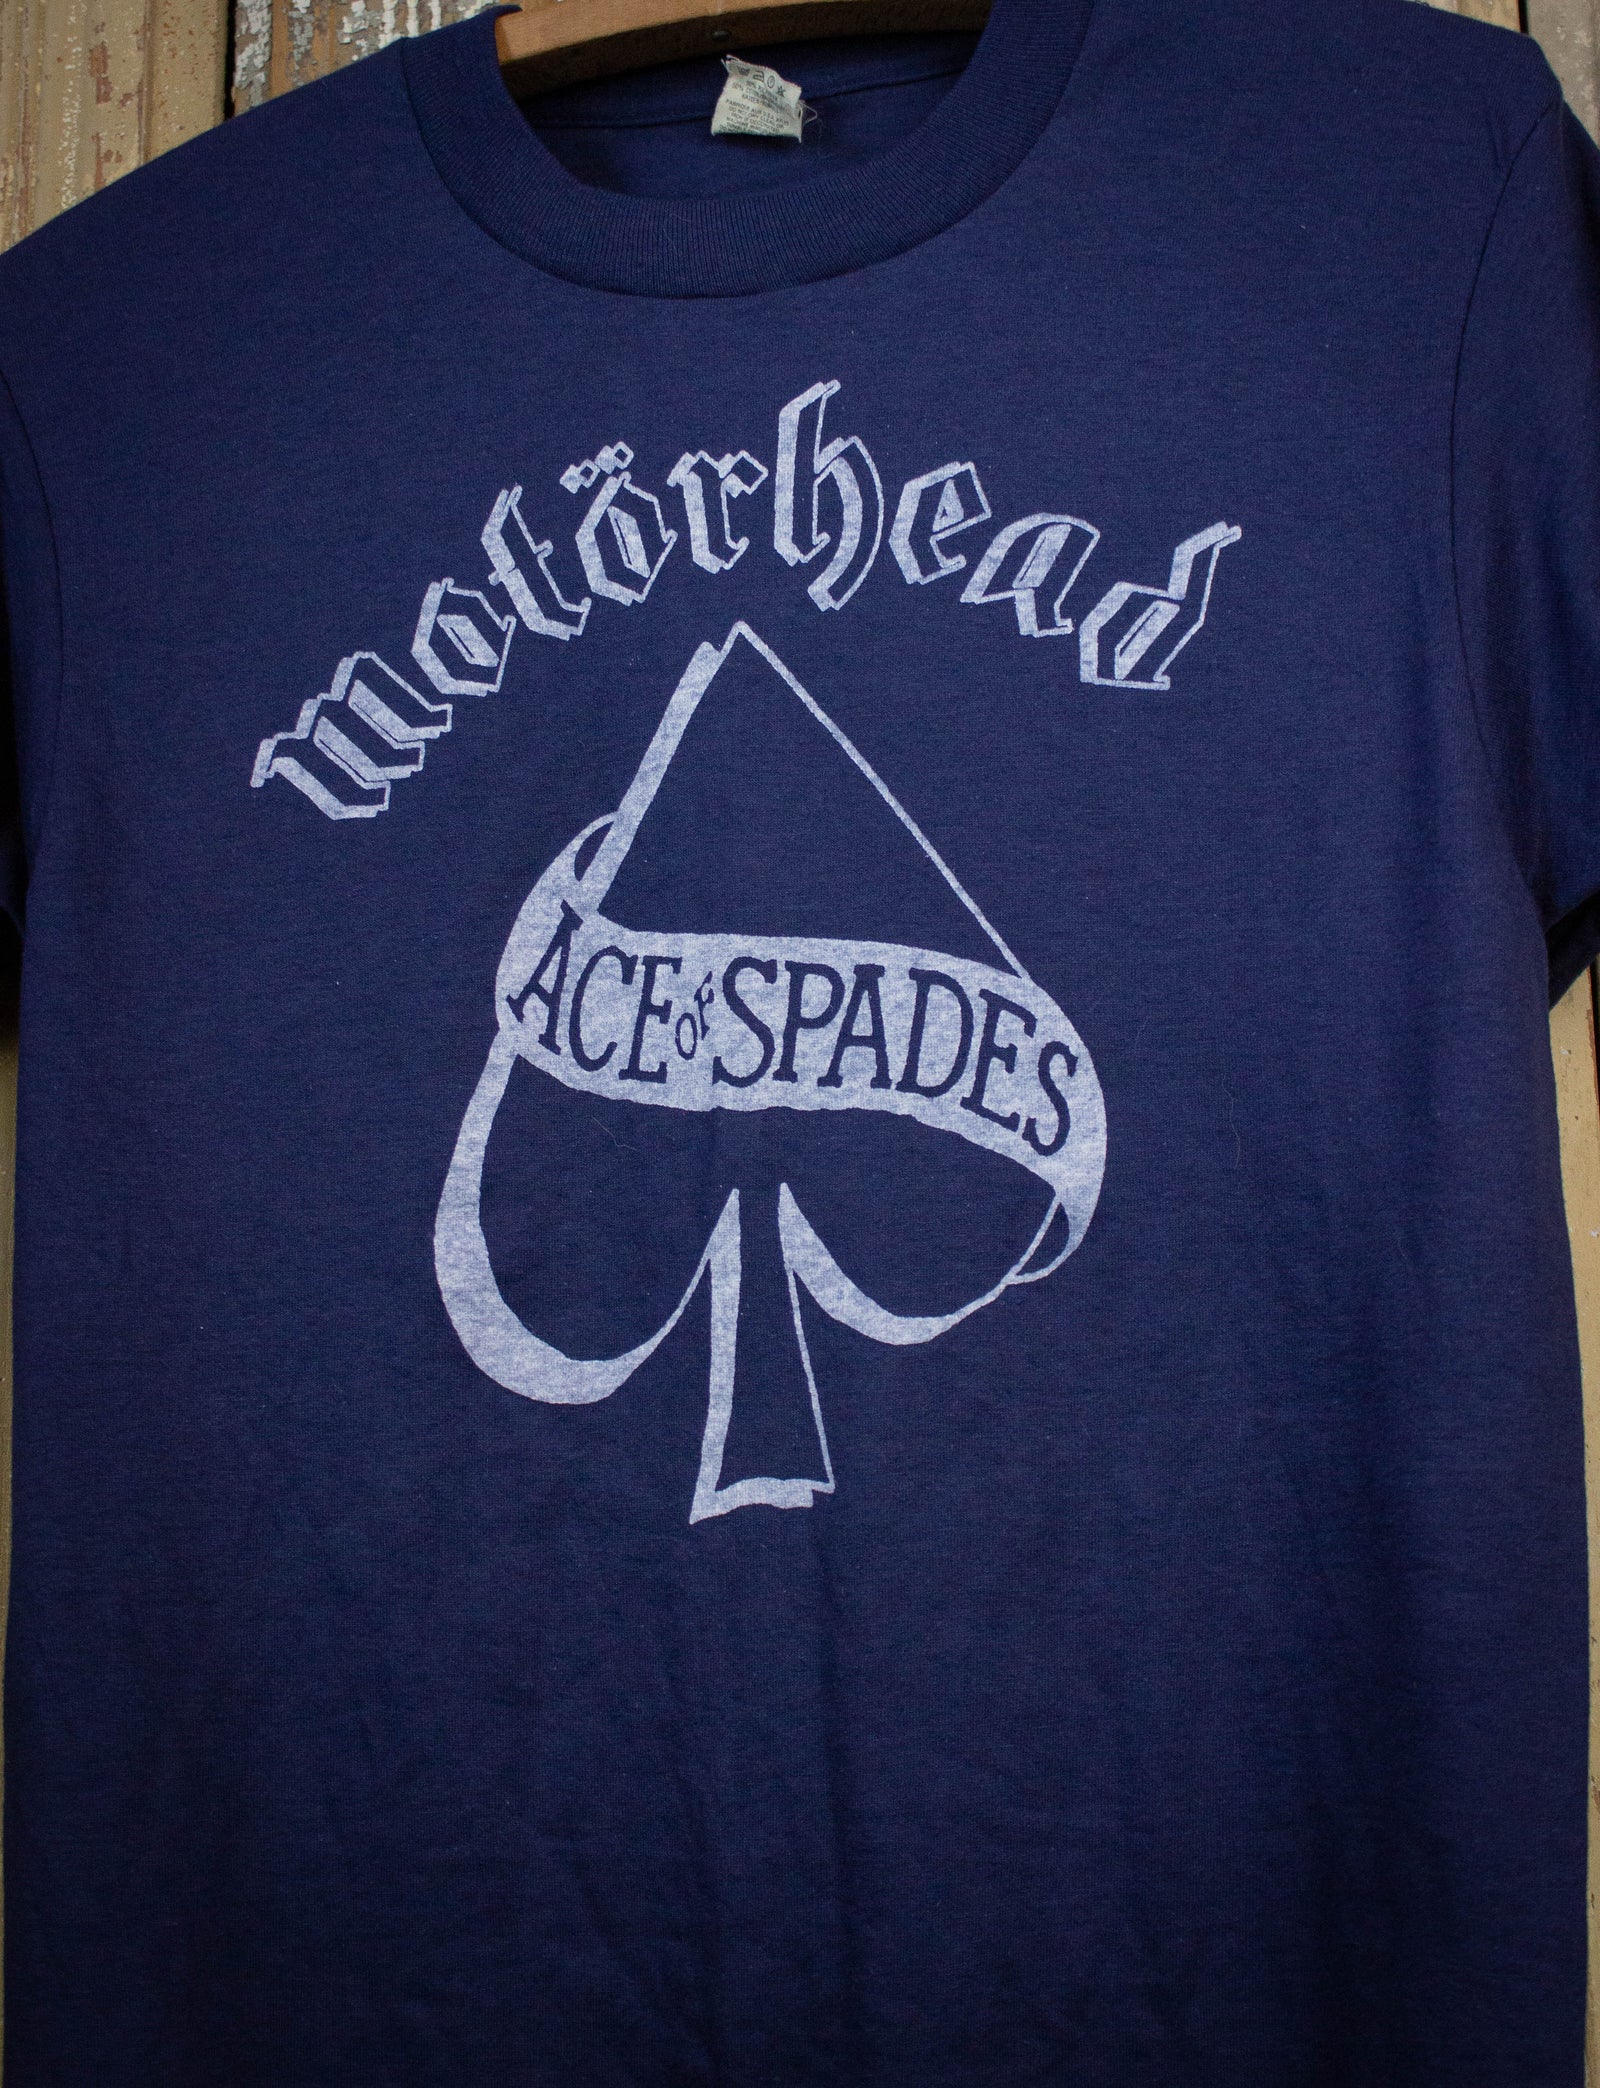 Vintage Motörhead Ace Of Spades Concert T Shirt s Blue Small